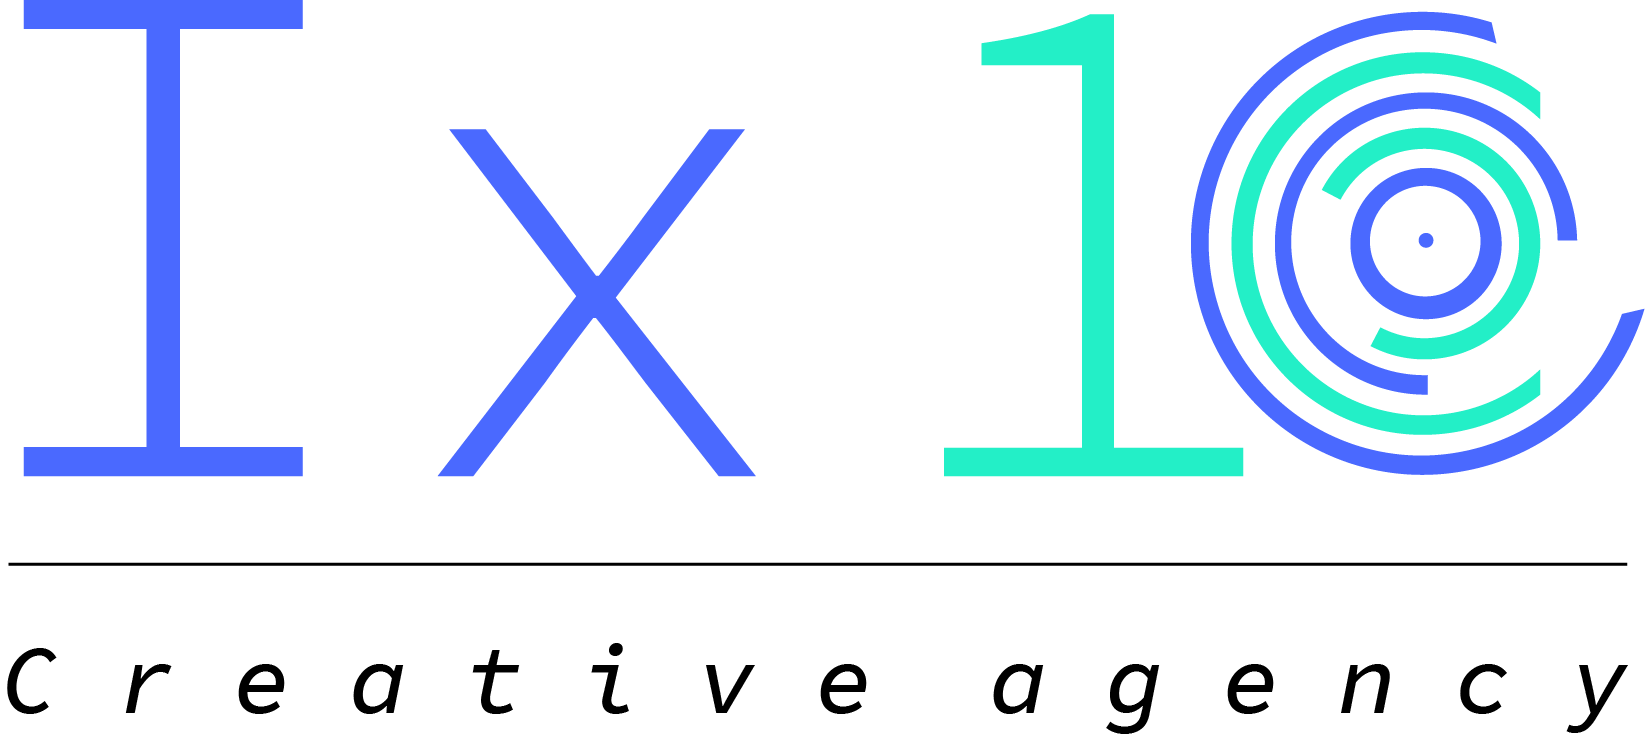 Ix 10 / Creative agency